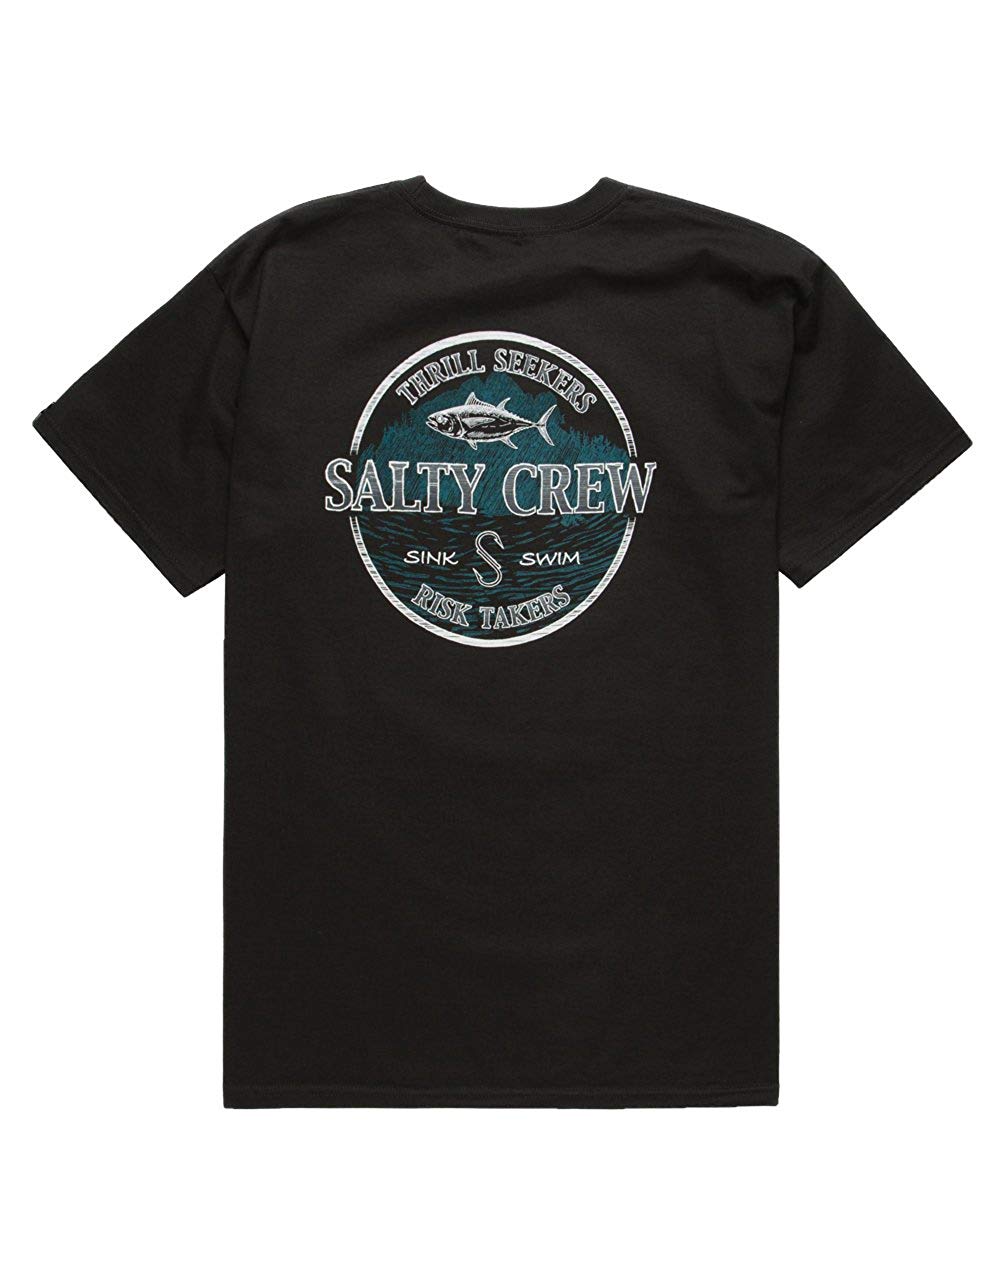 Salty Crew Logo - Amazon.com: Salty Crew Land and Sea T-Shirt, Black, Small: Clothing